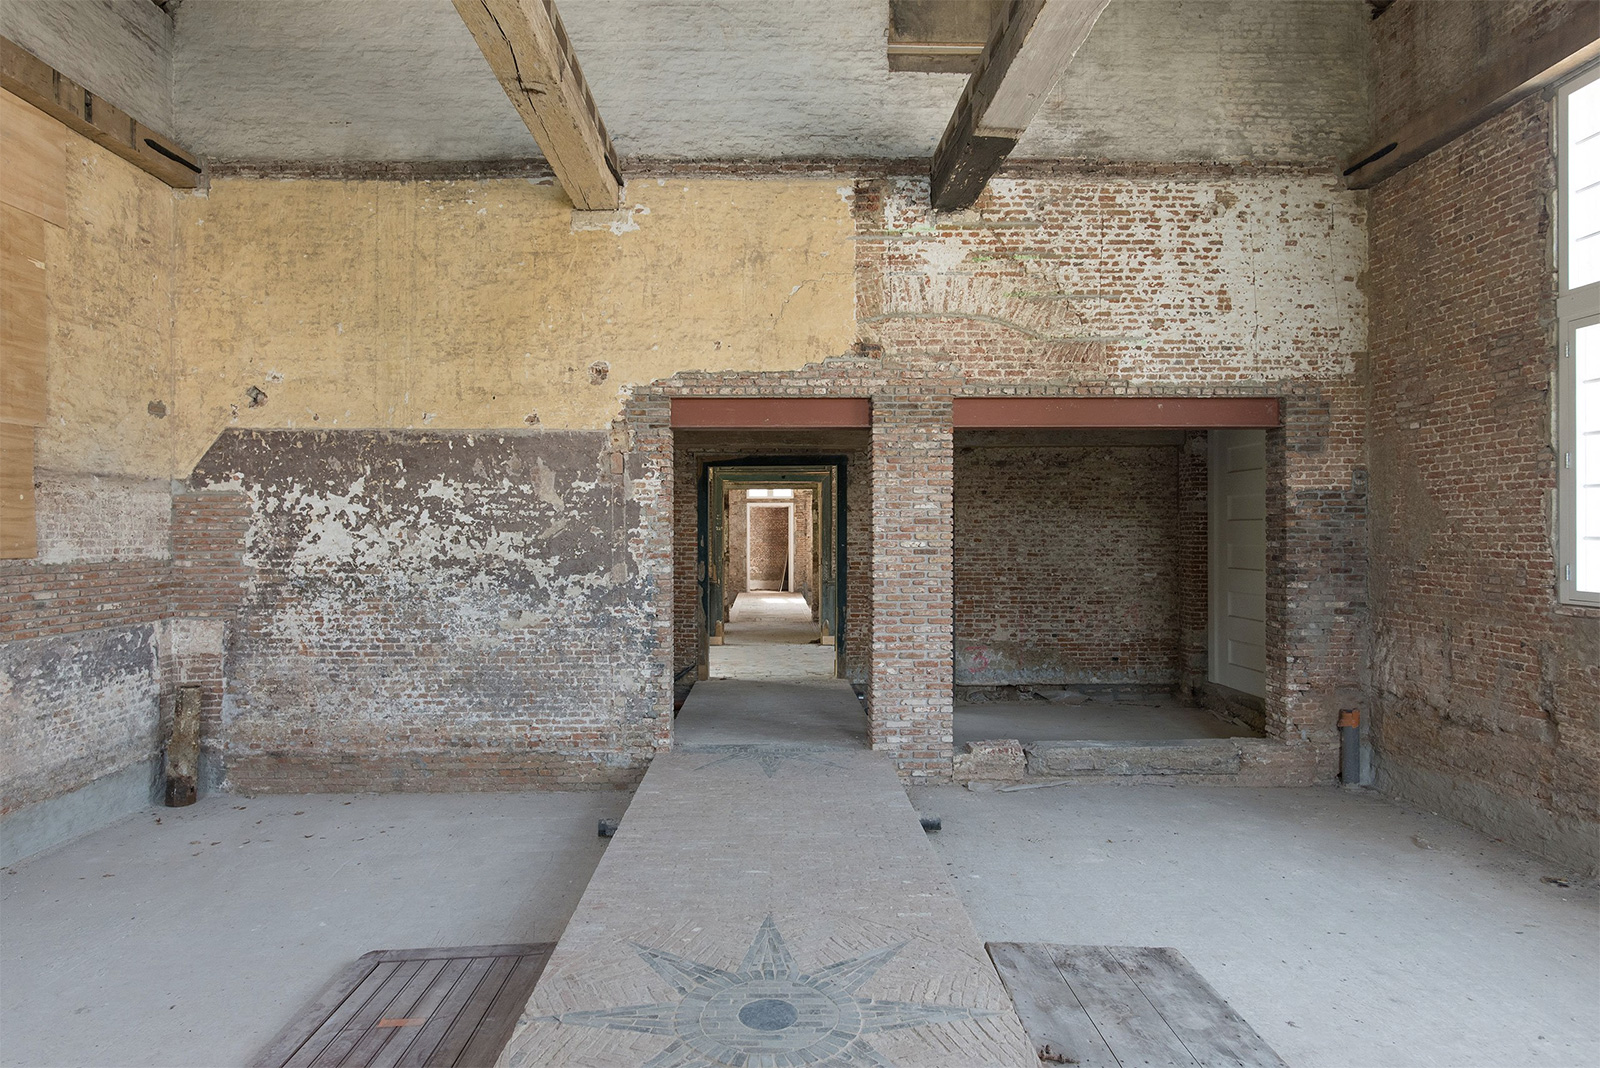 Patinaed brickwork sets the tone inside Antwerp's Stable restaurant